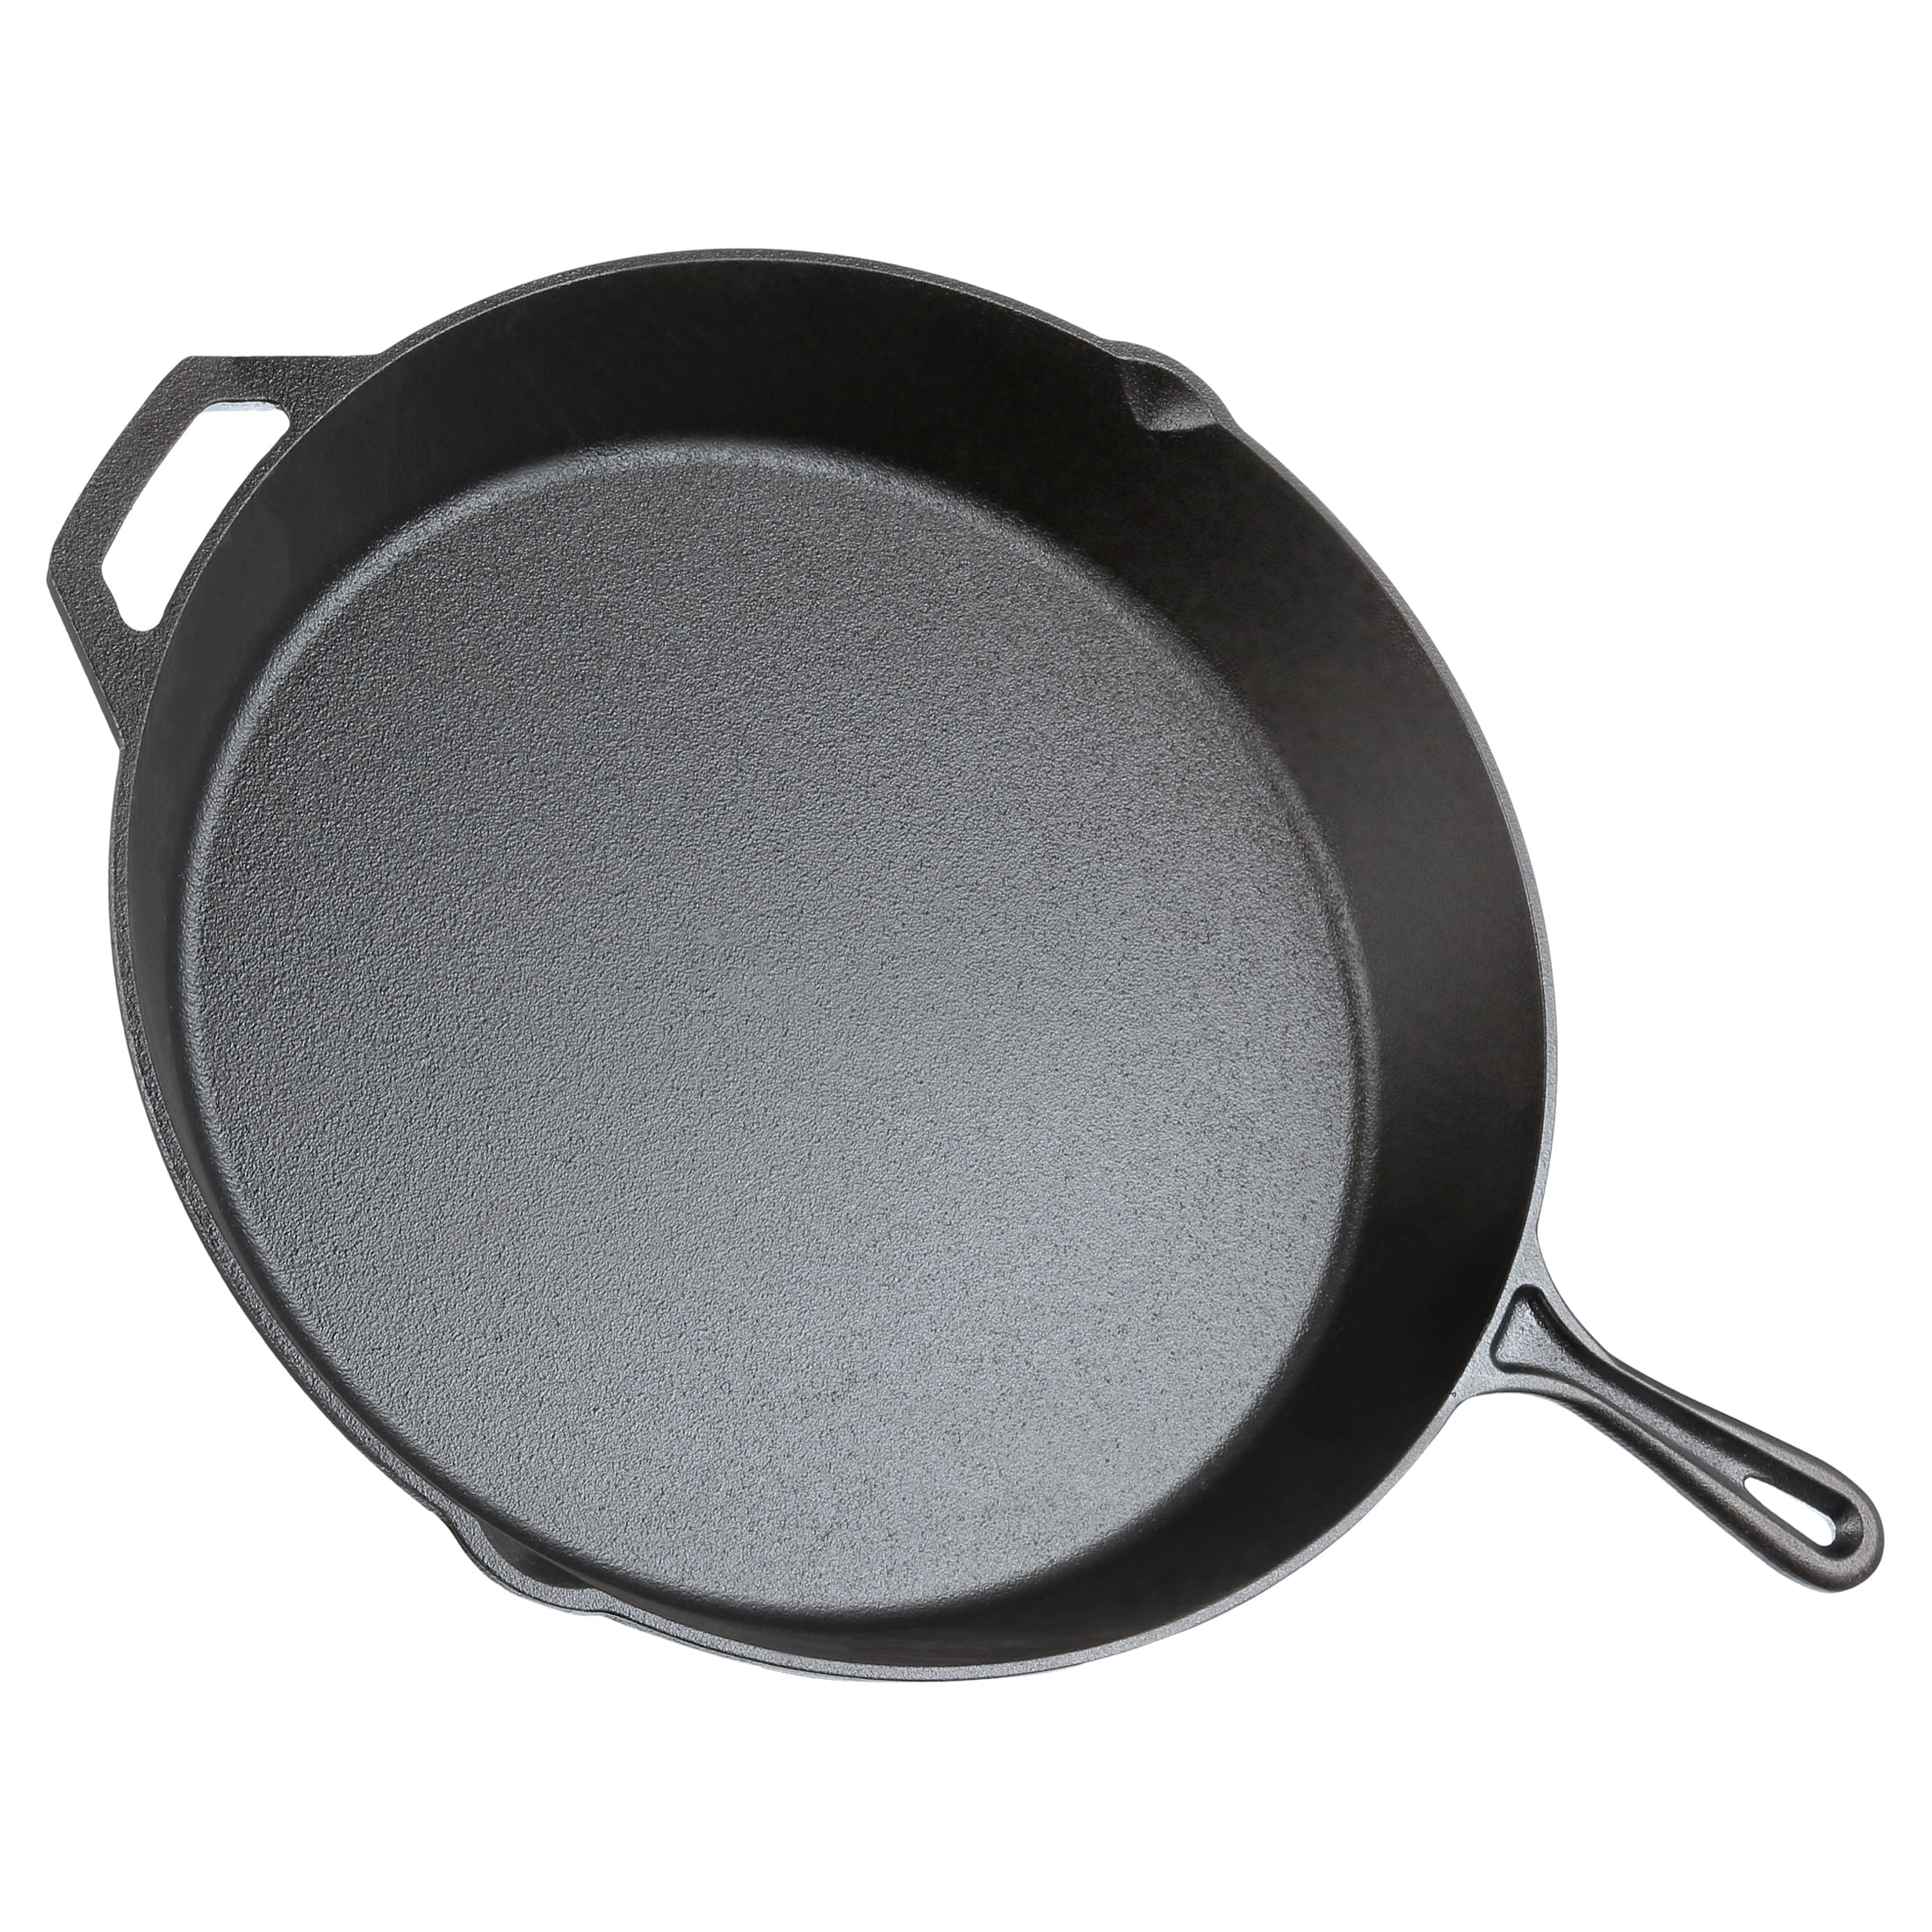 pre-seasoned cast iron aebleskiver pan, 15